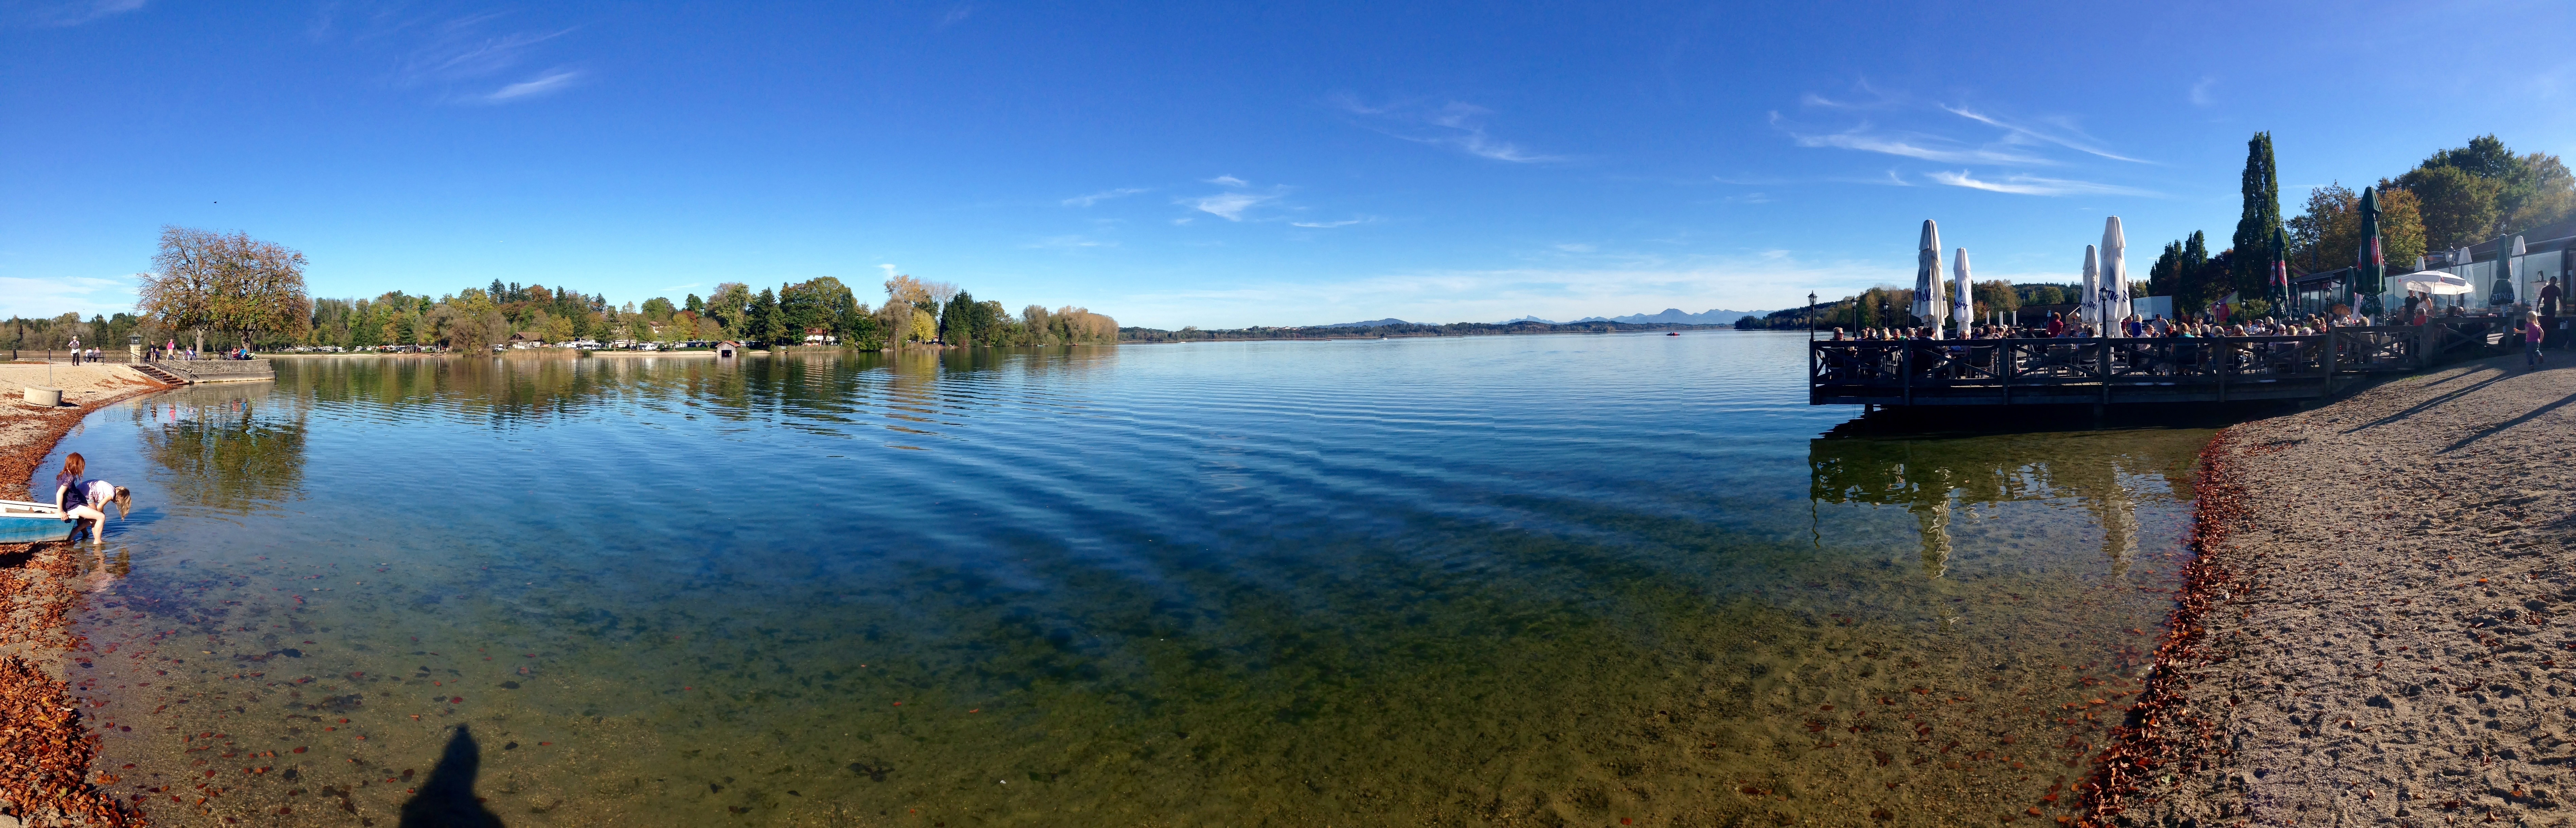 Panorama, Lake, Water, Bank, Blue Sky, sky, reflection